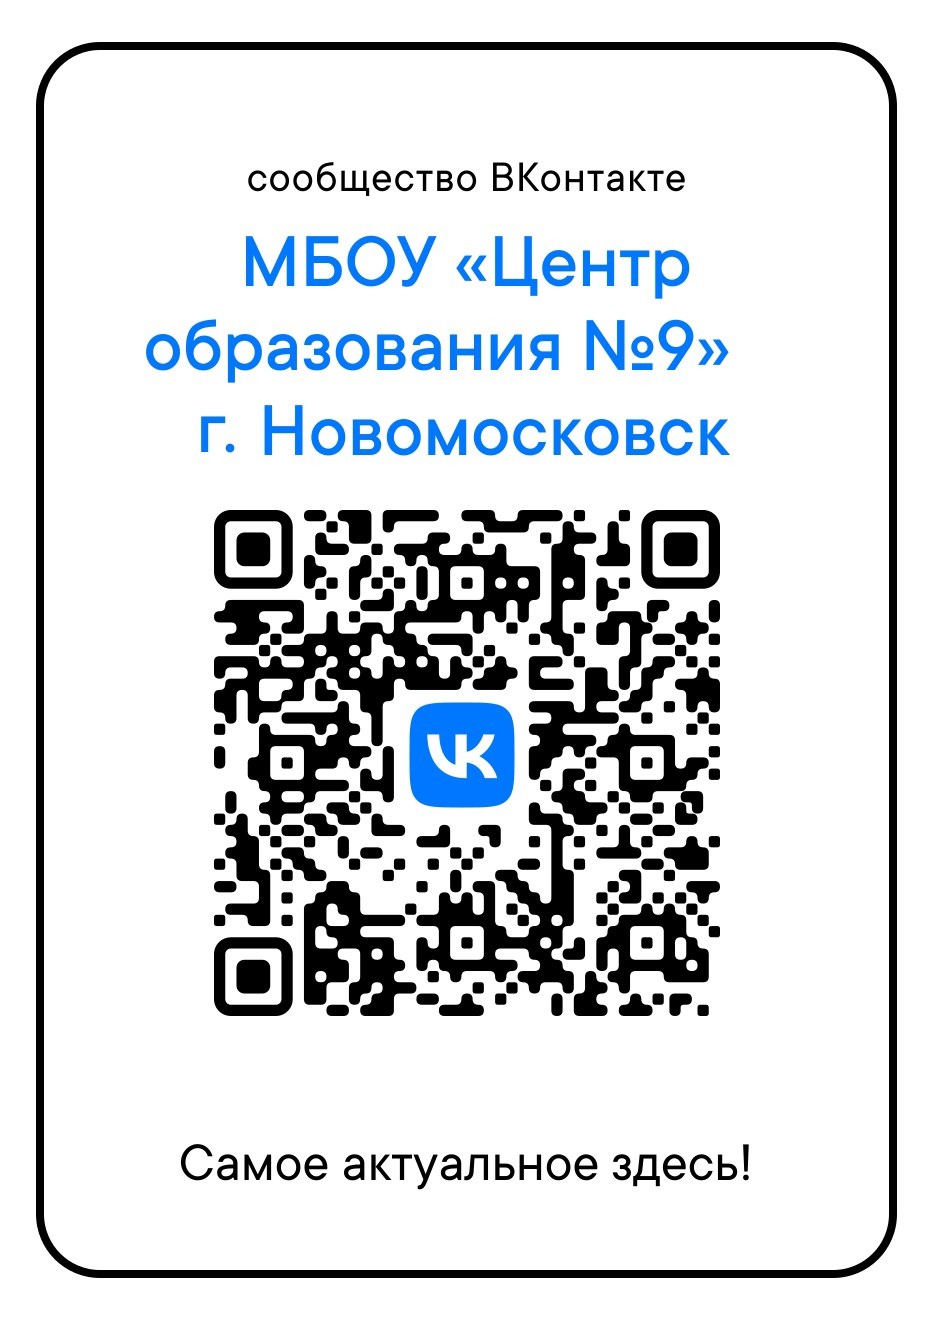 QR-код на страницу группы МБОУ &amp;quot;Центр образования №9&amp;quot; &amp;quot;ВКонтакте&amp;quot;.